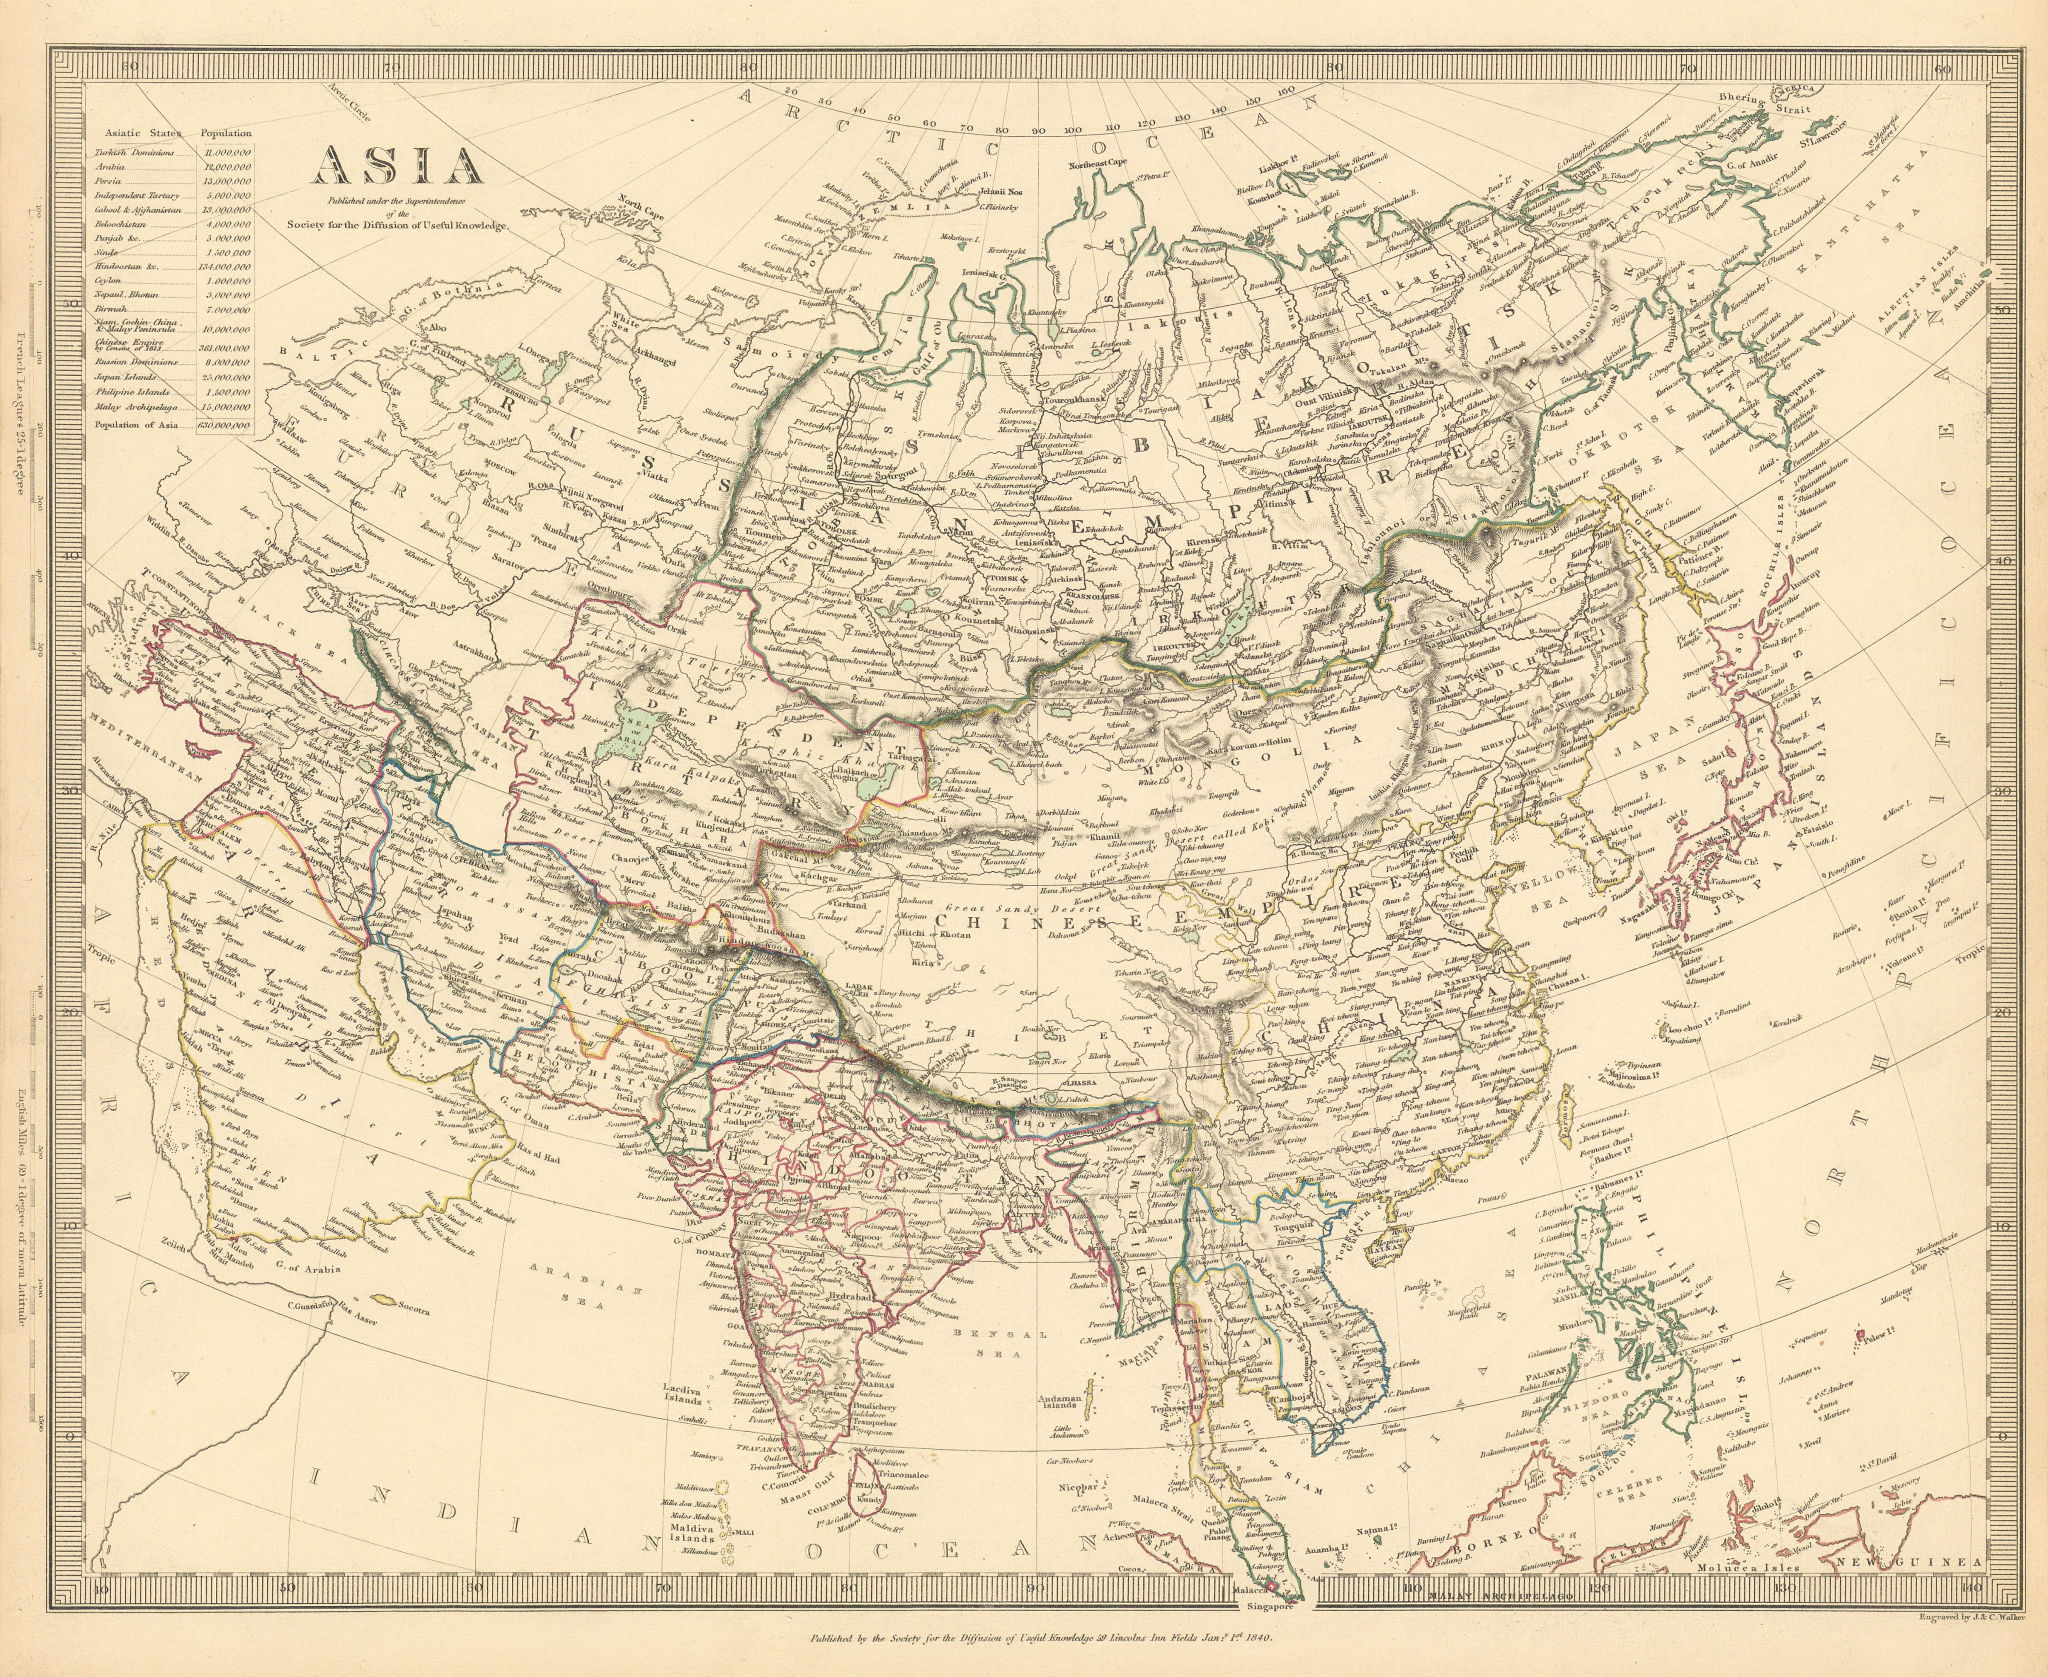 Associate Product ASIA. India Arabia Persia Siam Cochinchina Tartary. Population. SDUK 1844 map